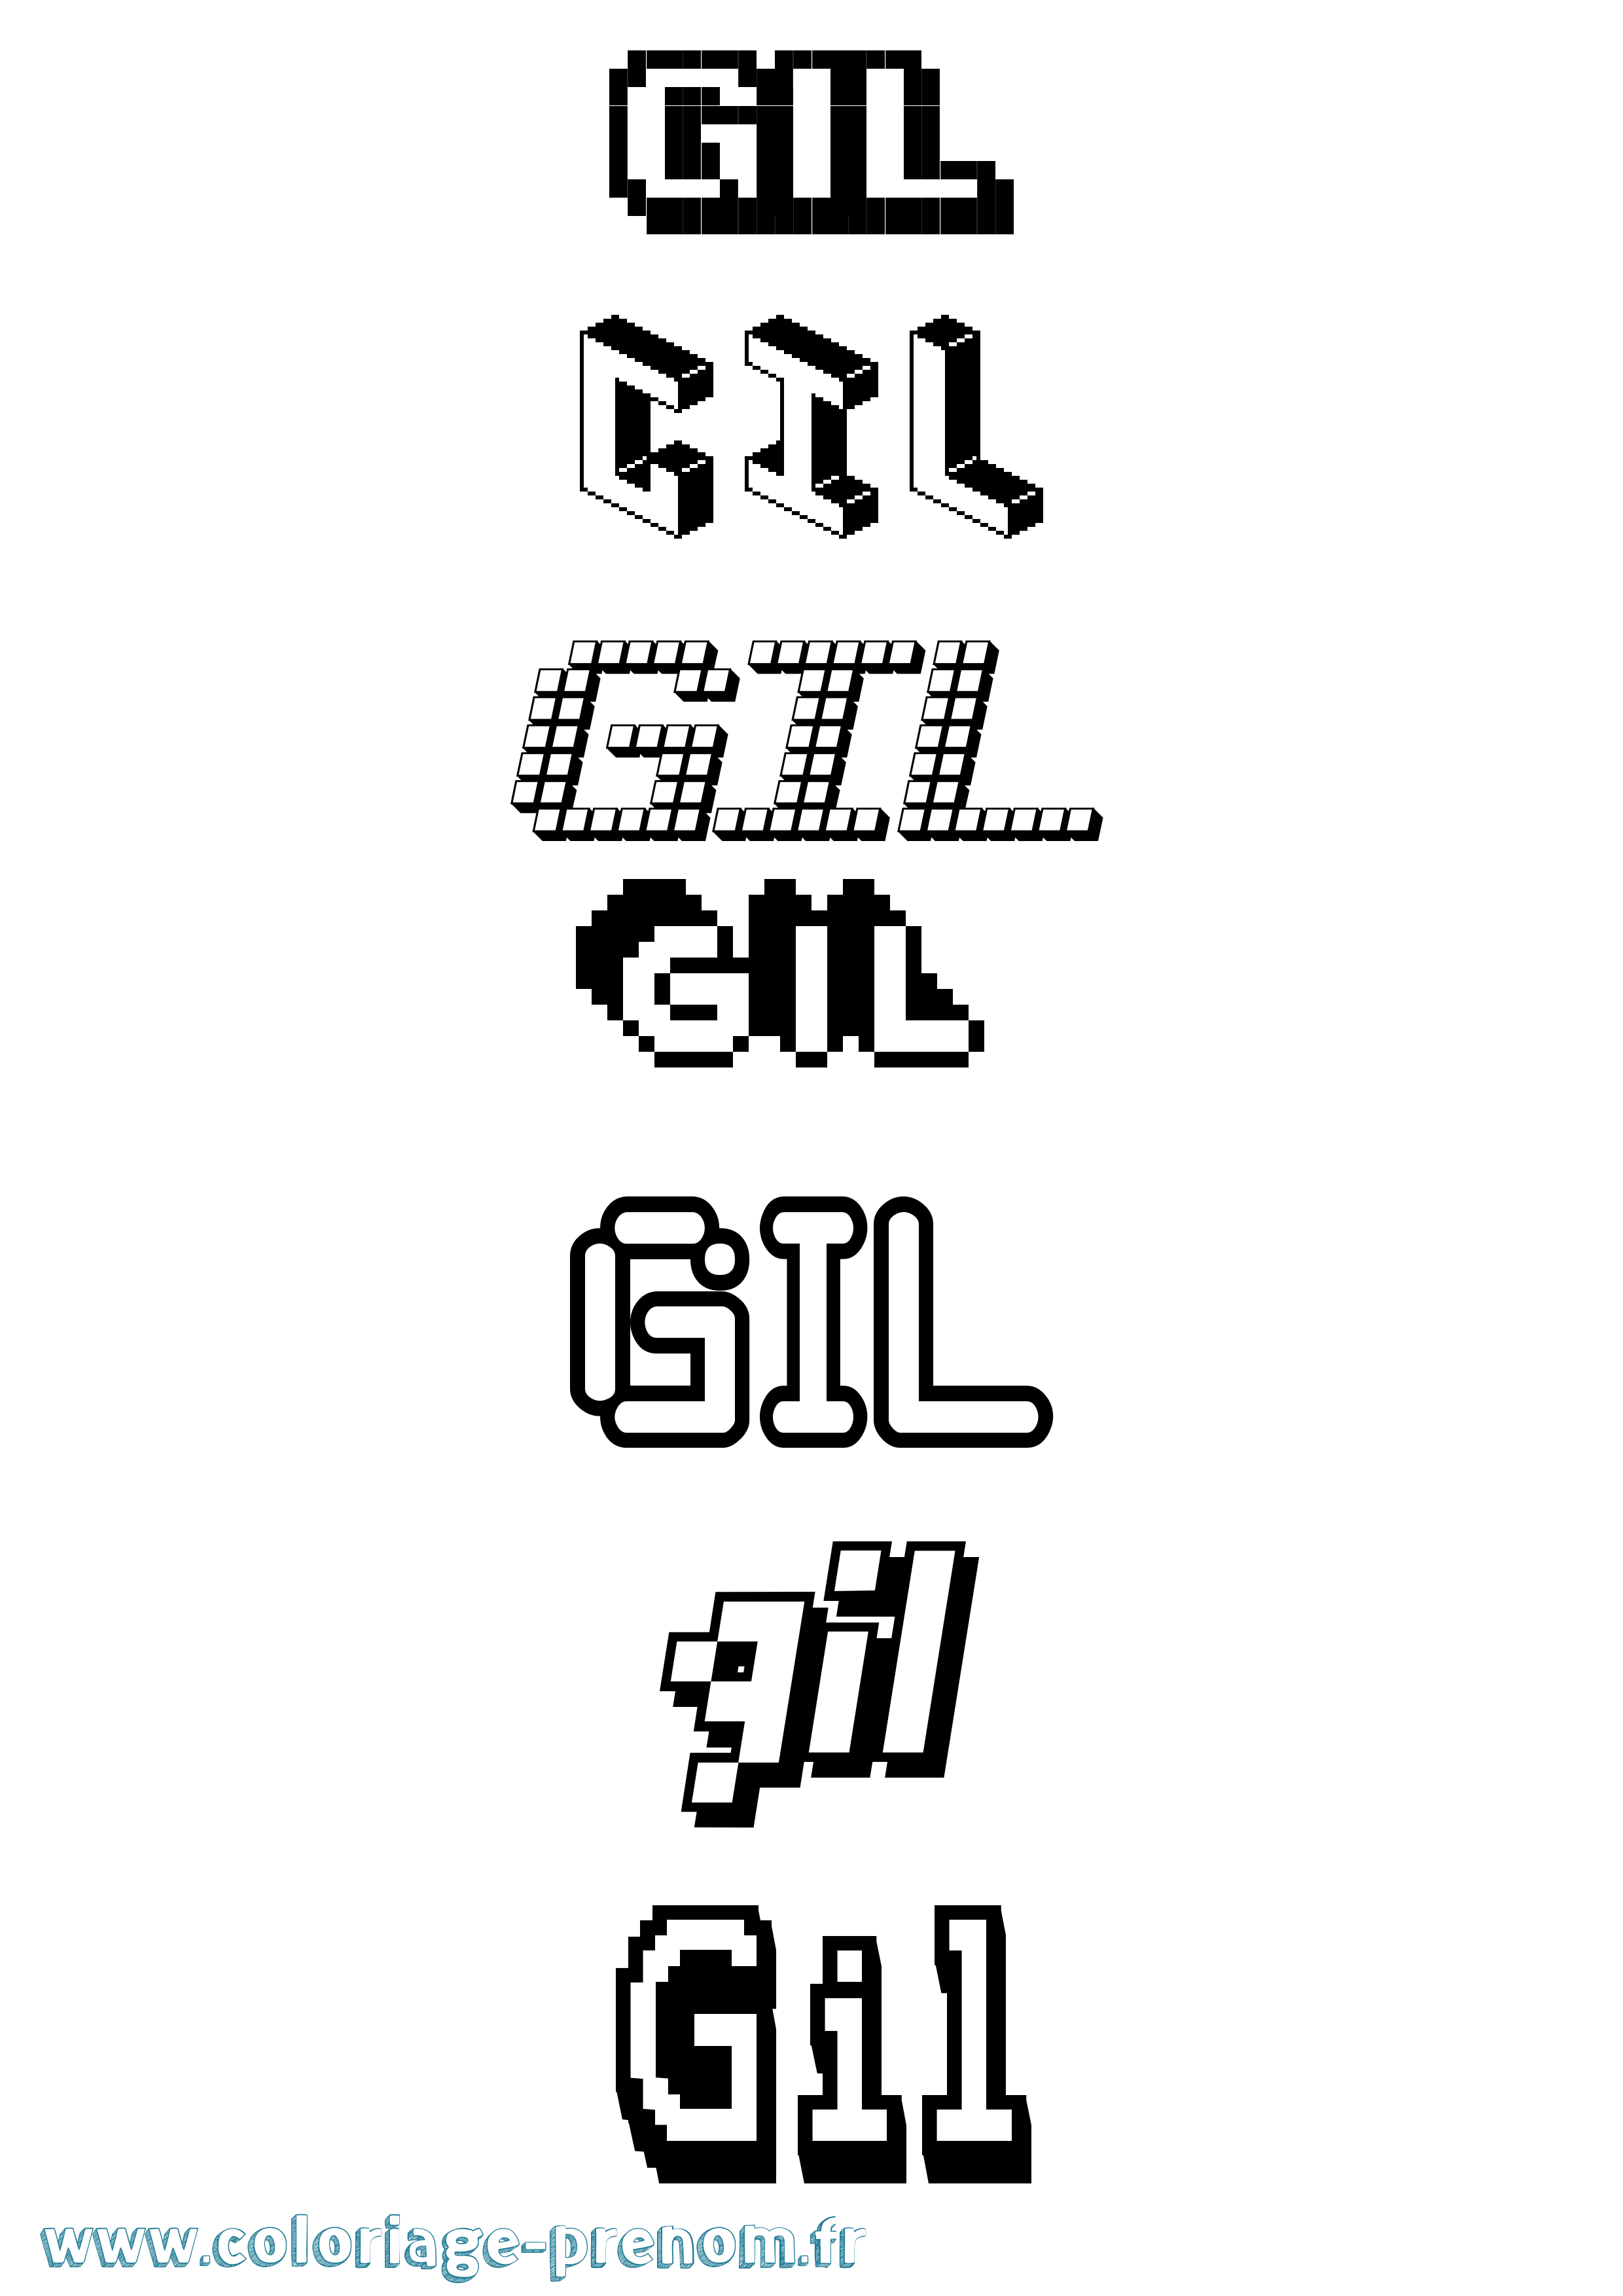 Coloriage prénom Gil Pixel